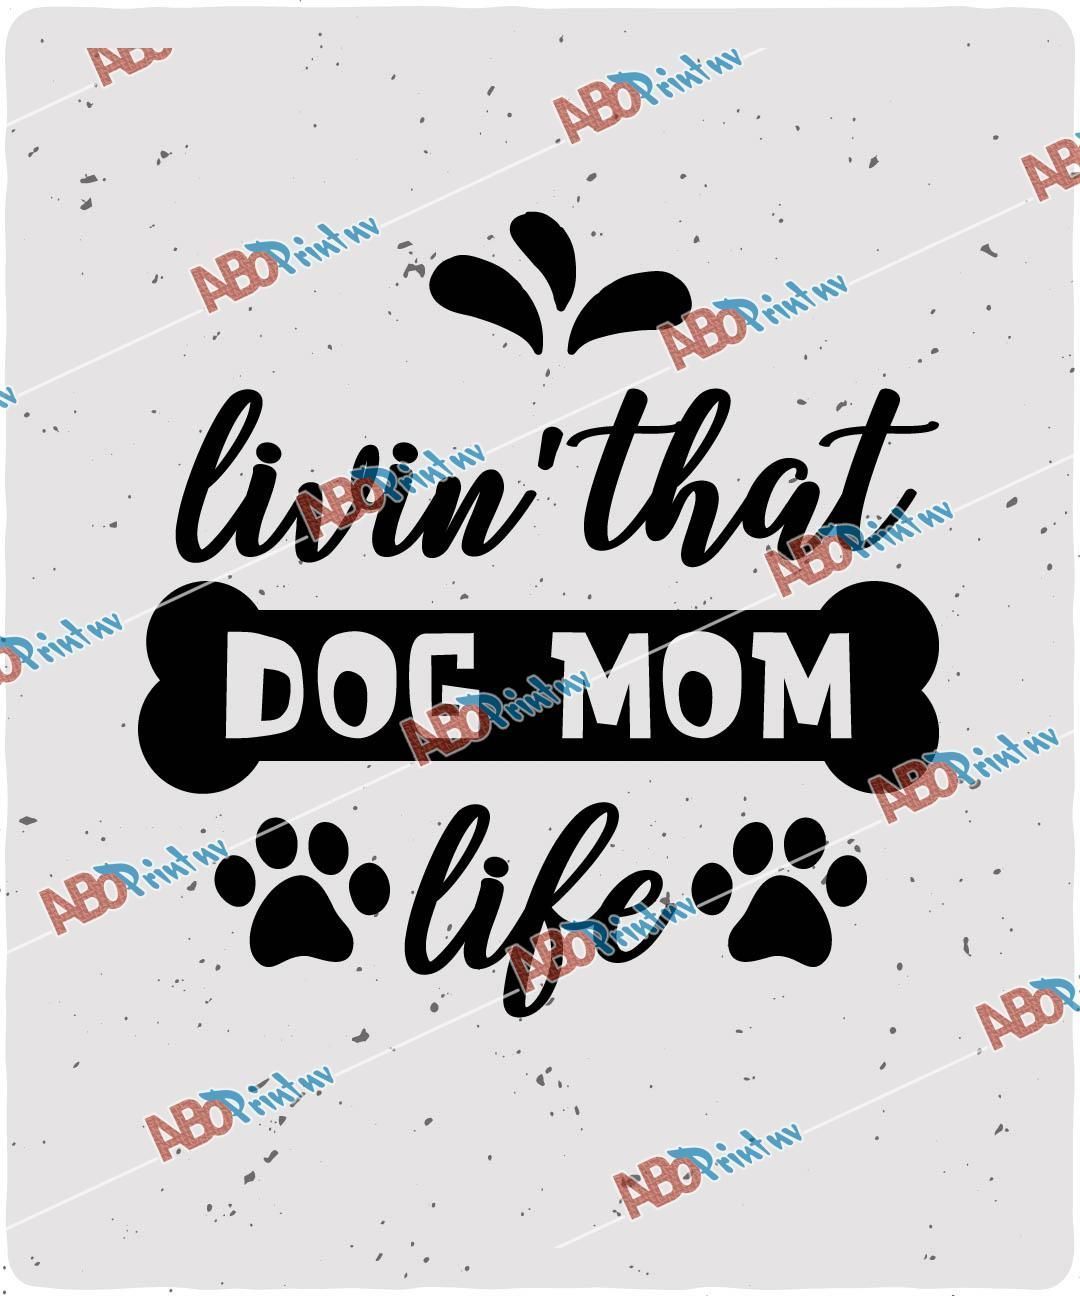 Livin' that dog mom lifeJPG (1).jpg